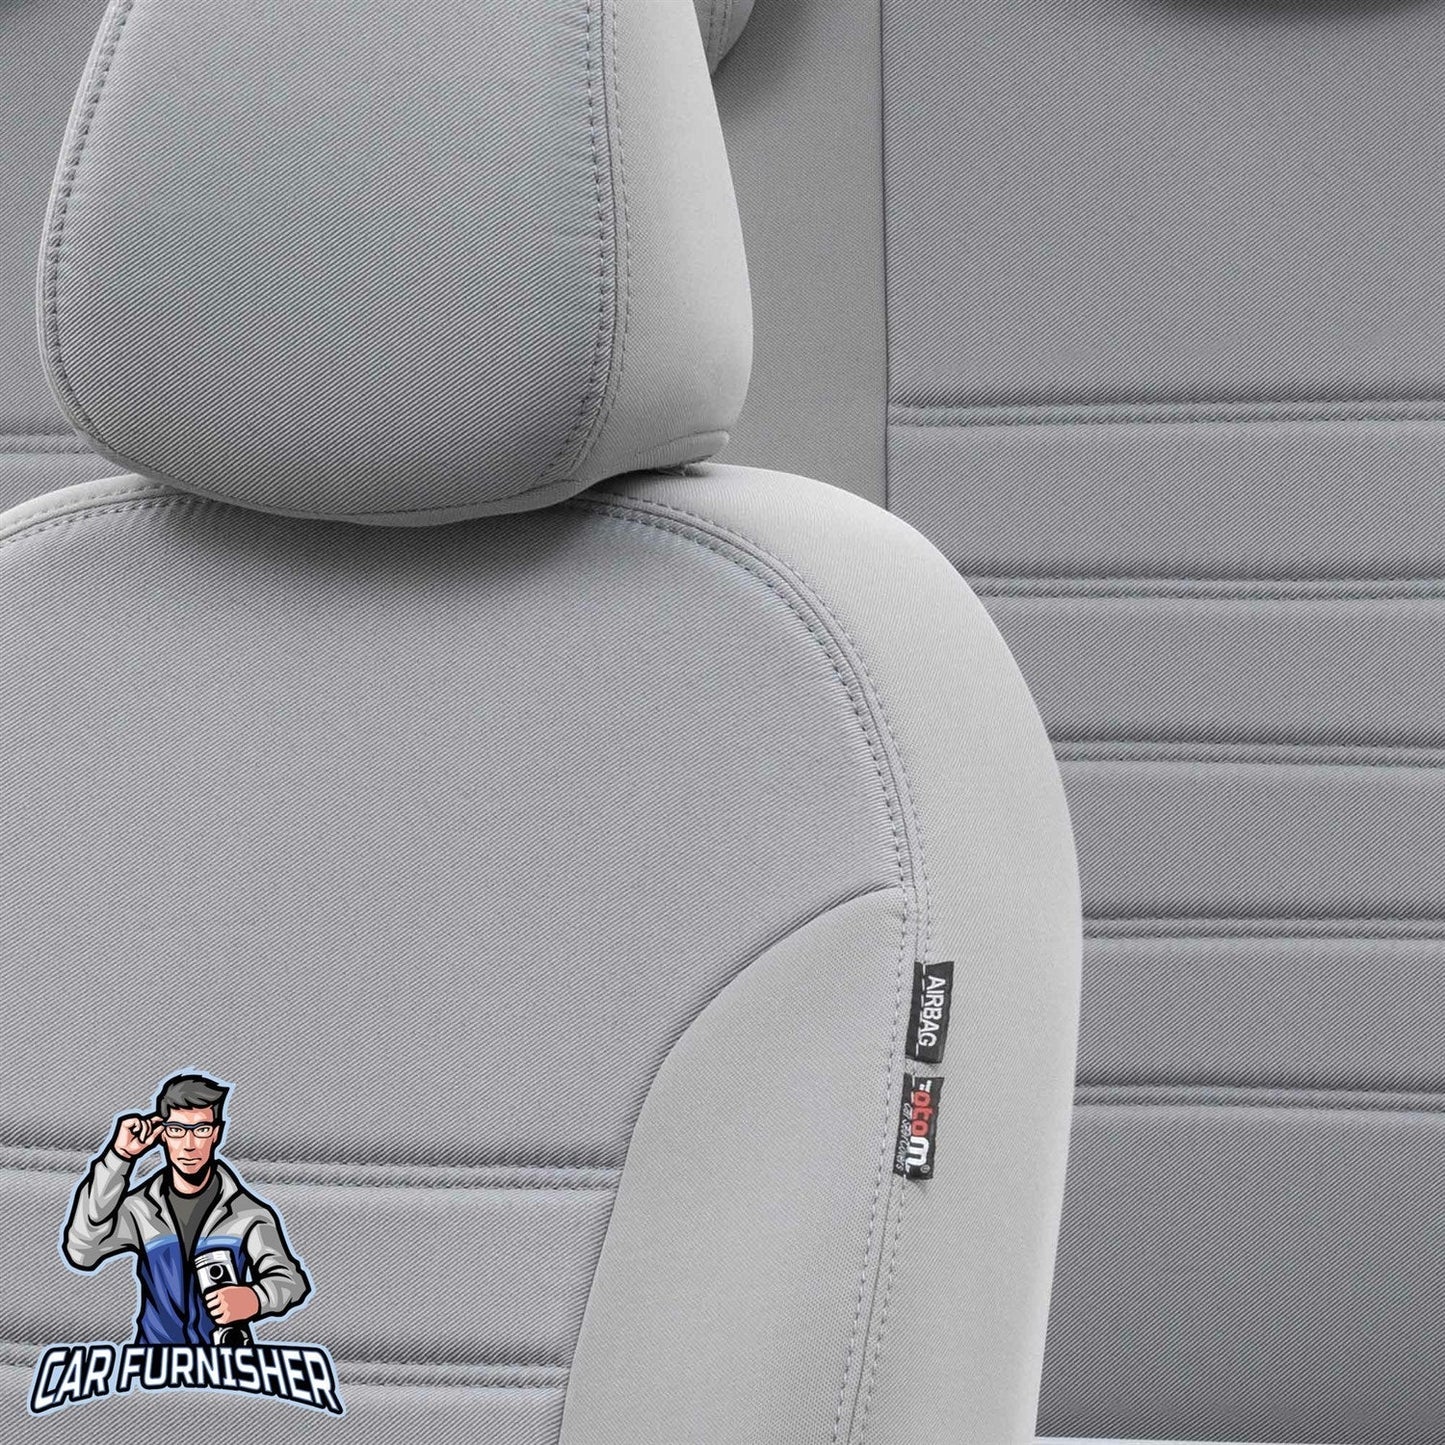 Proton Gen-2 Seat Covers Original Jacquard Design Light Gray Jacquard Fabric